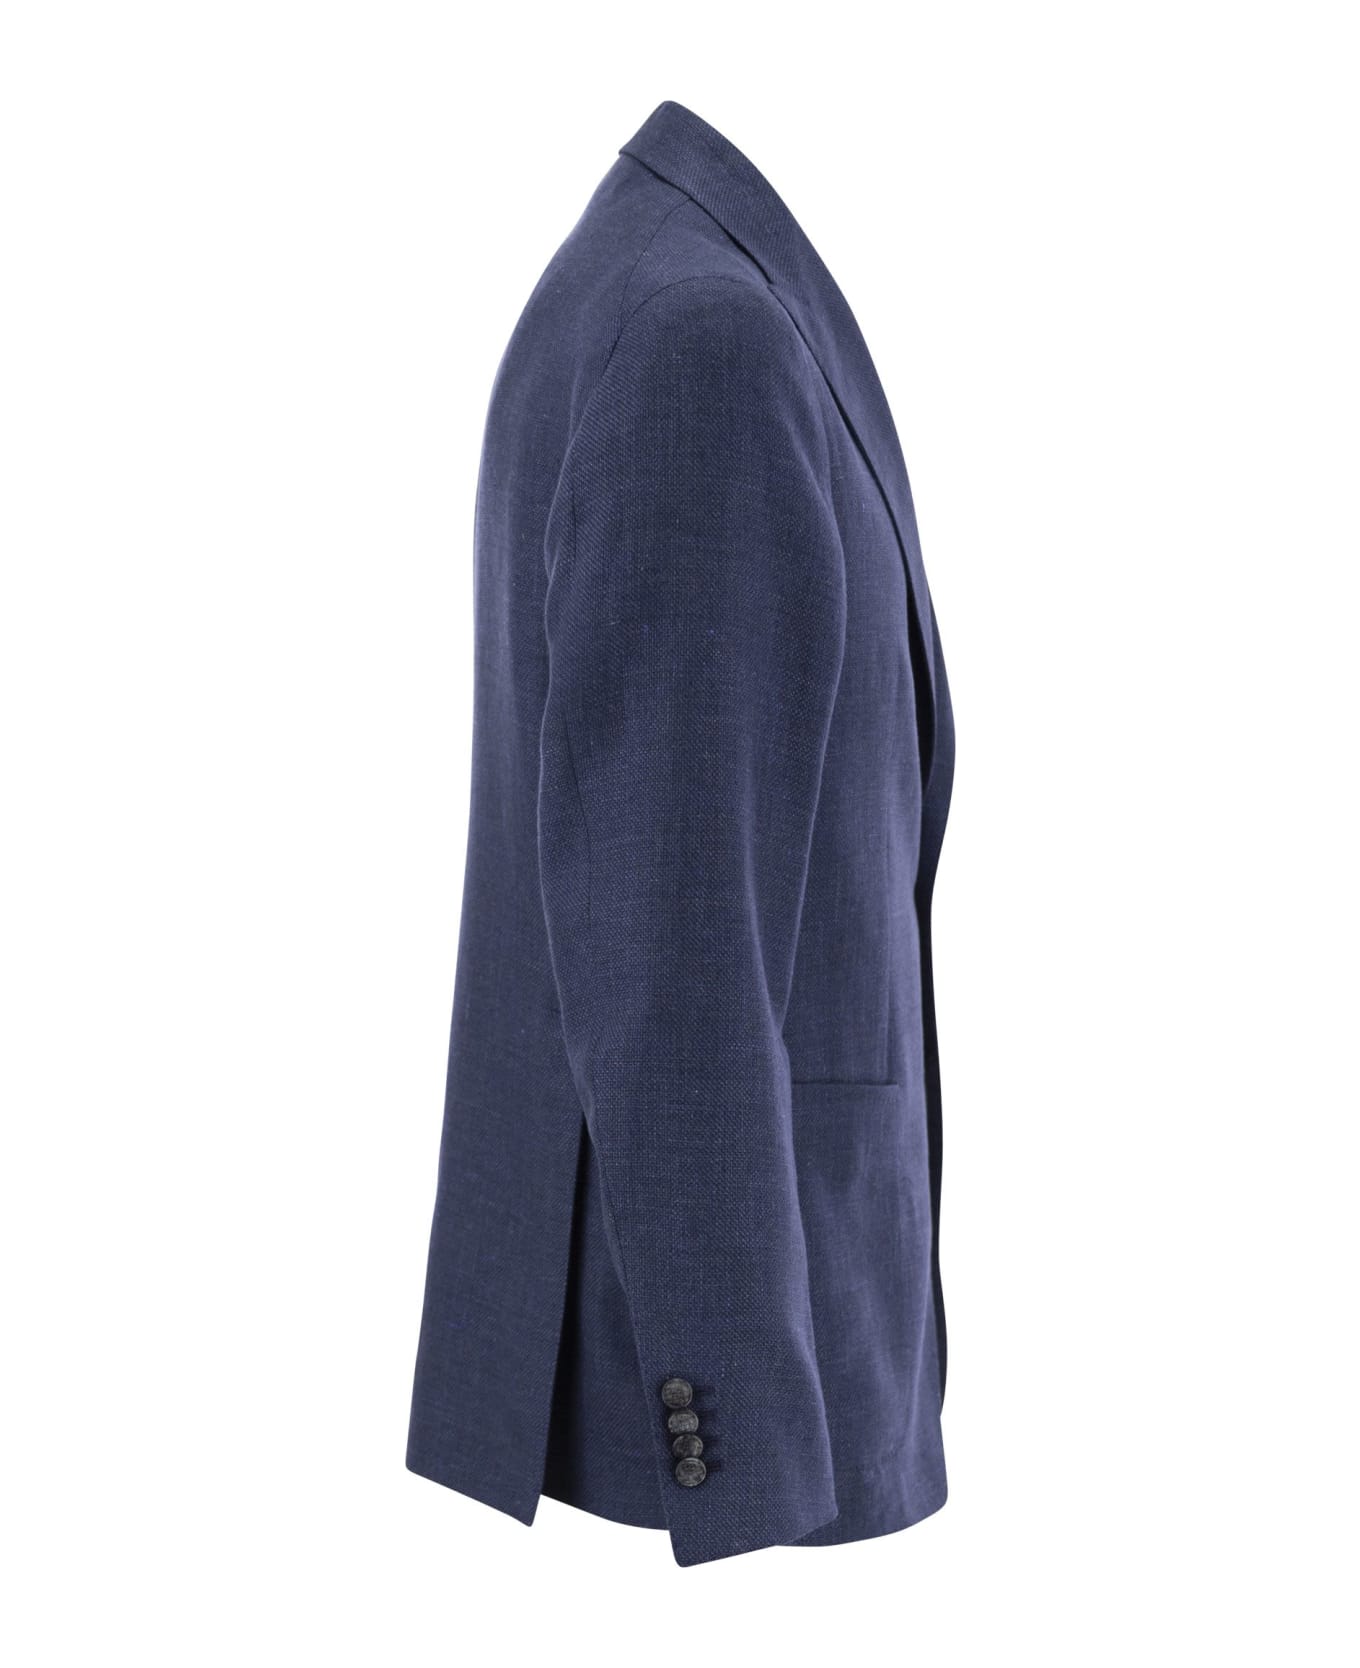 Tagliatore Linen And Virgin Wool Two-button Jacket - Avio